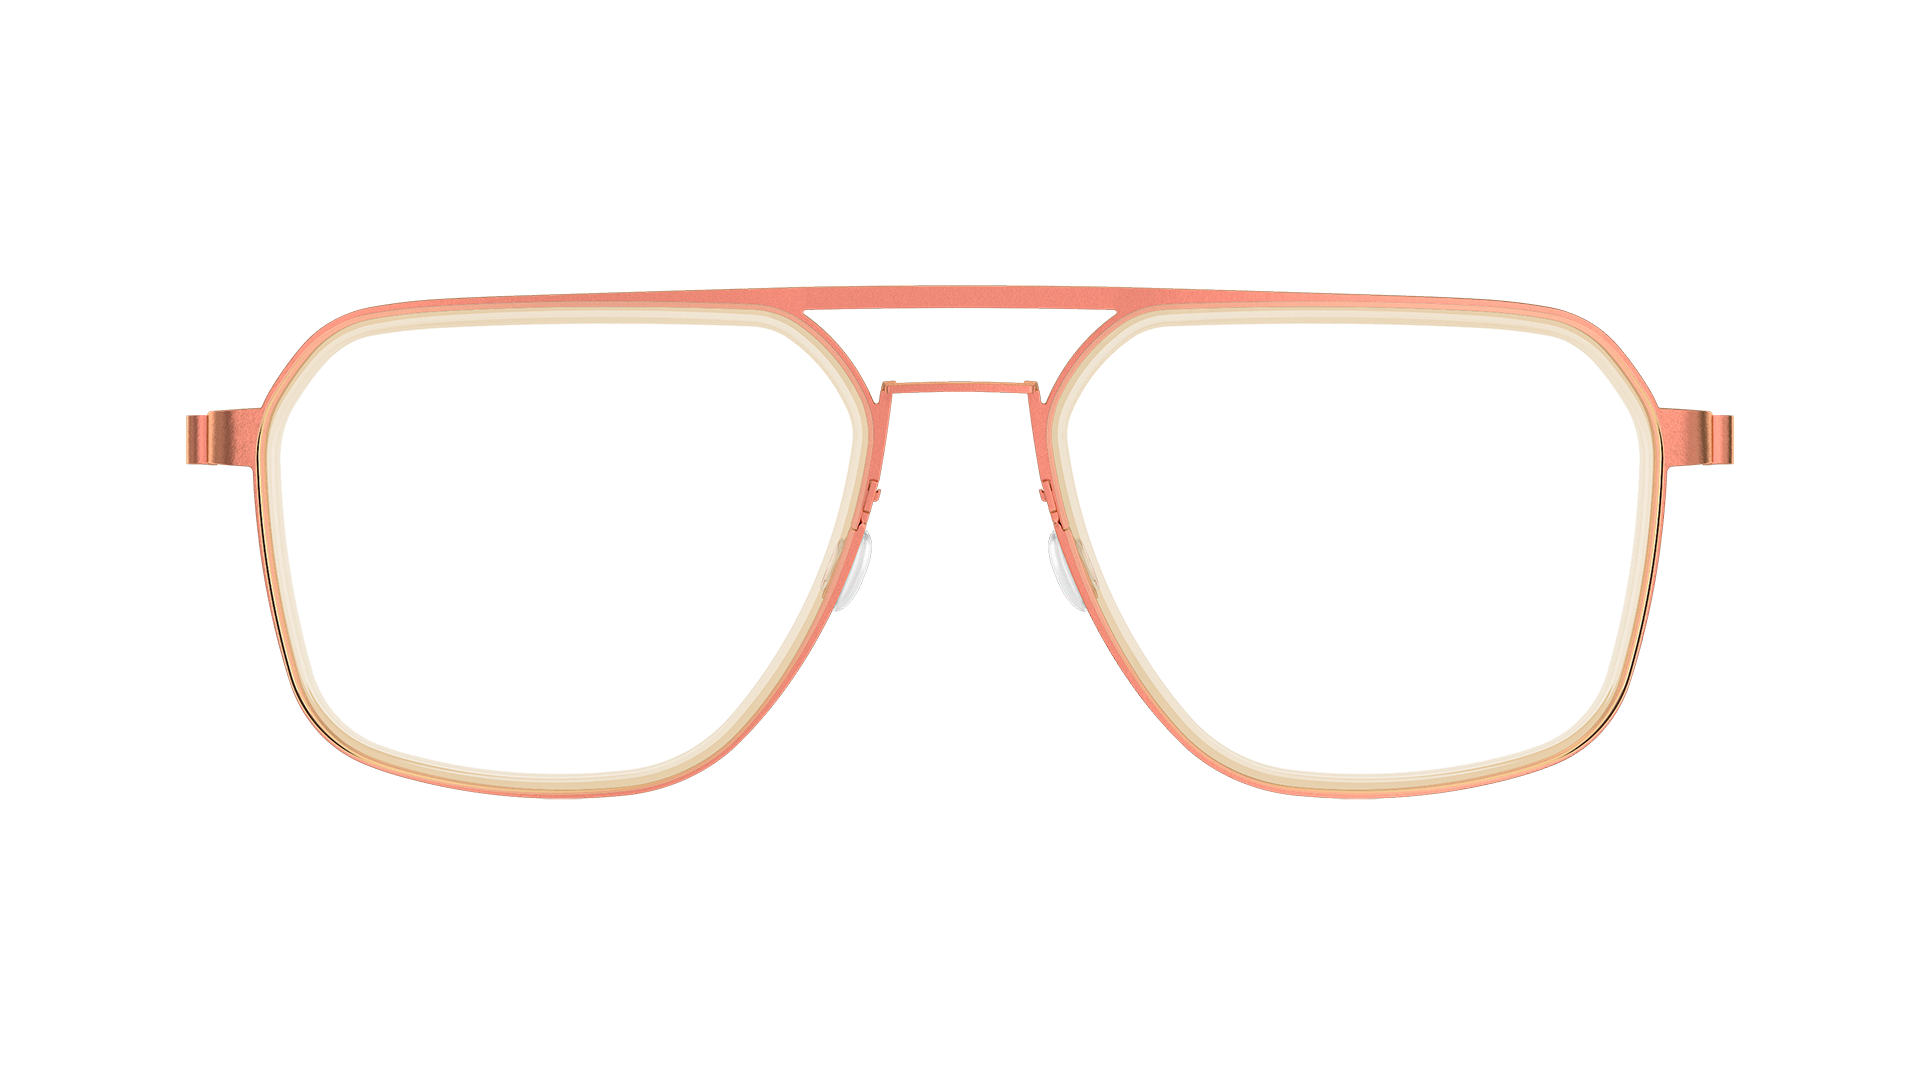 LINDBERG strip Model 9753 60 orange rim rounded square shape glasses featuring a double bar bridge